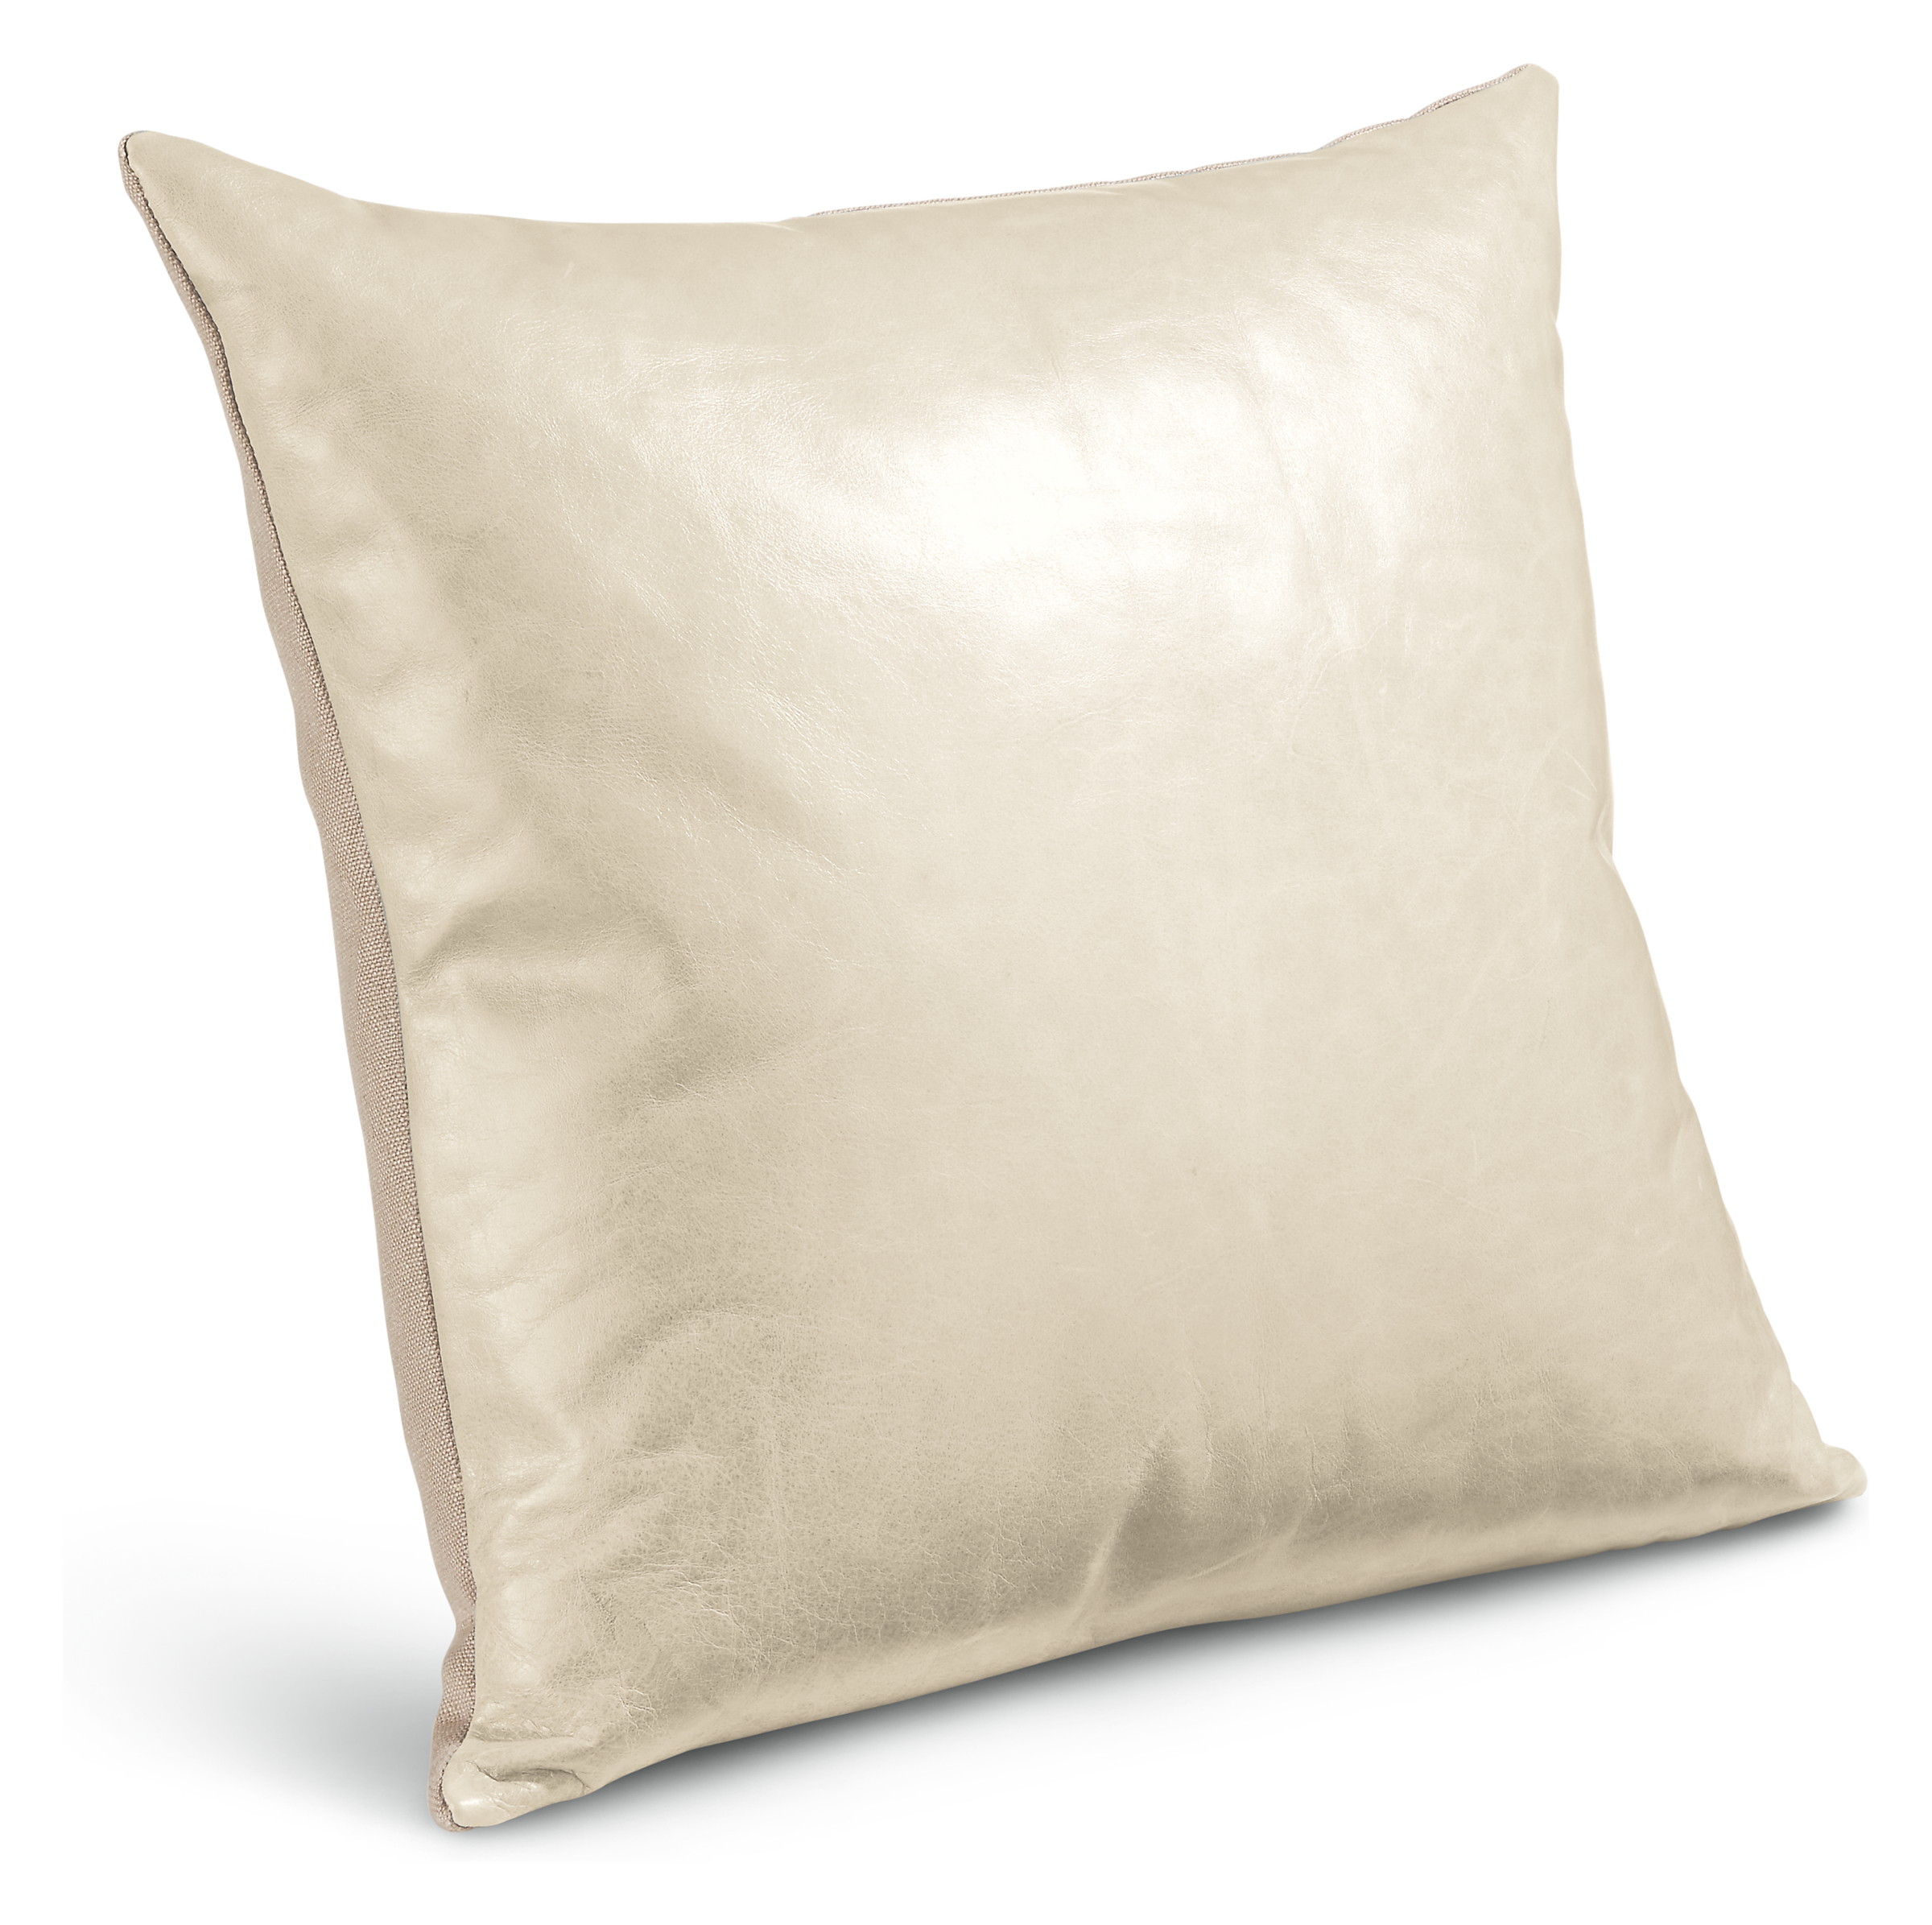 Ewan Leather Pillows